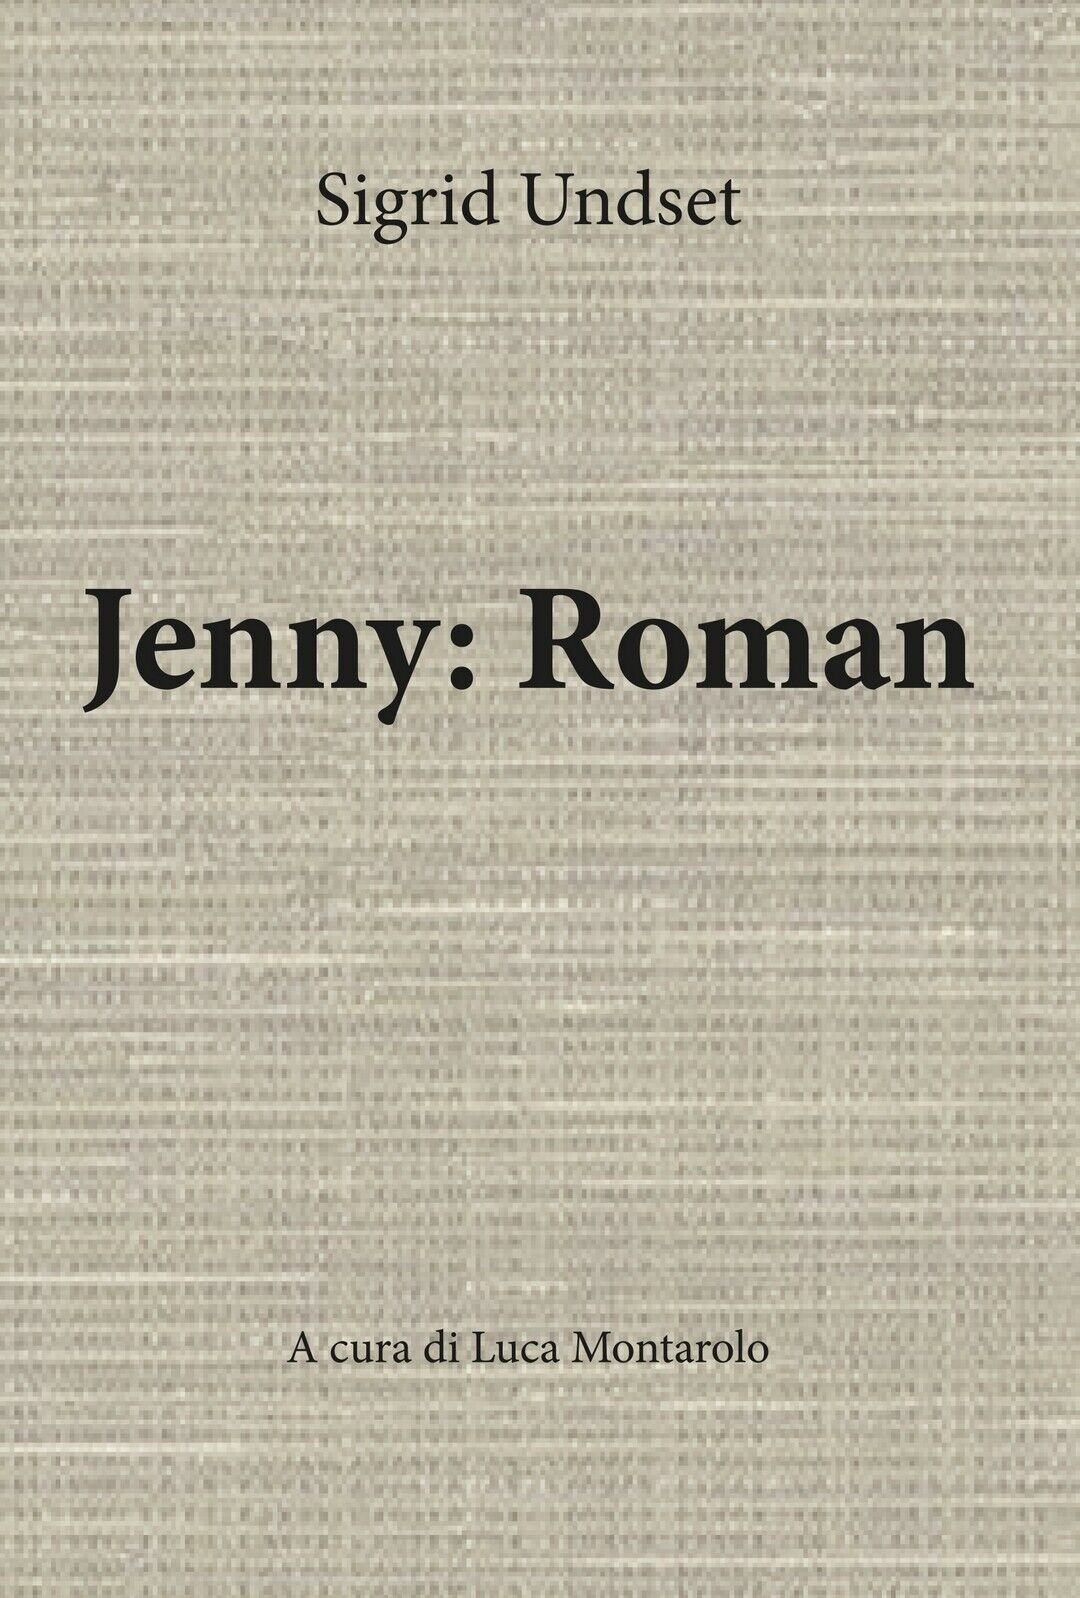 Jenny: Roman A cura di Luca Montarolo  di Sigrid Undset,  2020,  Youcanprint